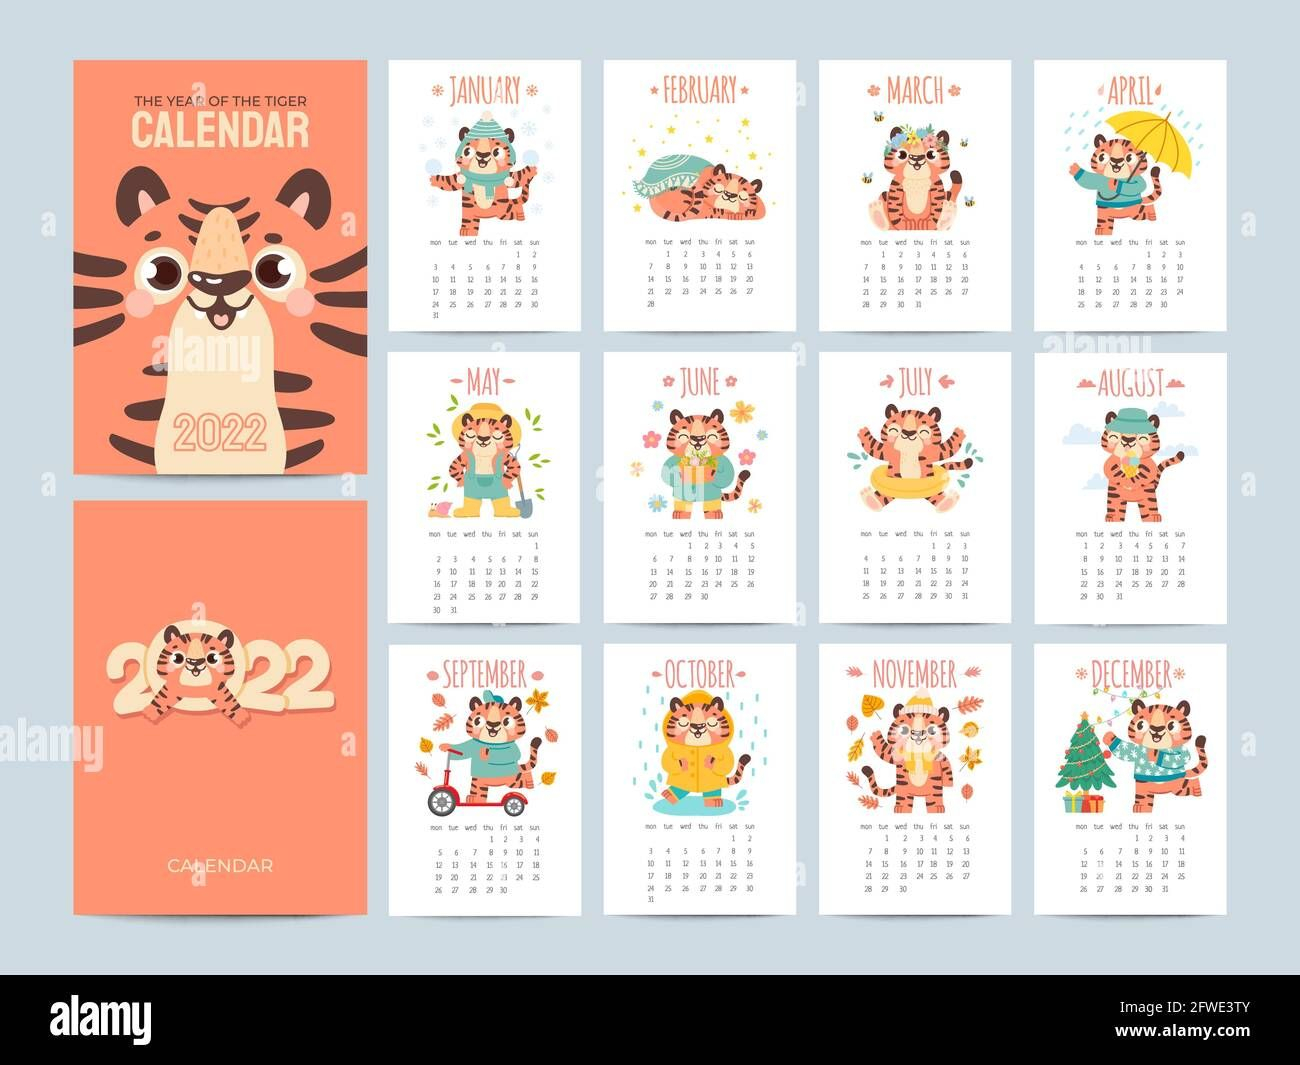 Chinese Calendar 2022 Animal - January 2022 Calendar